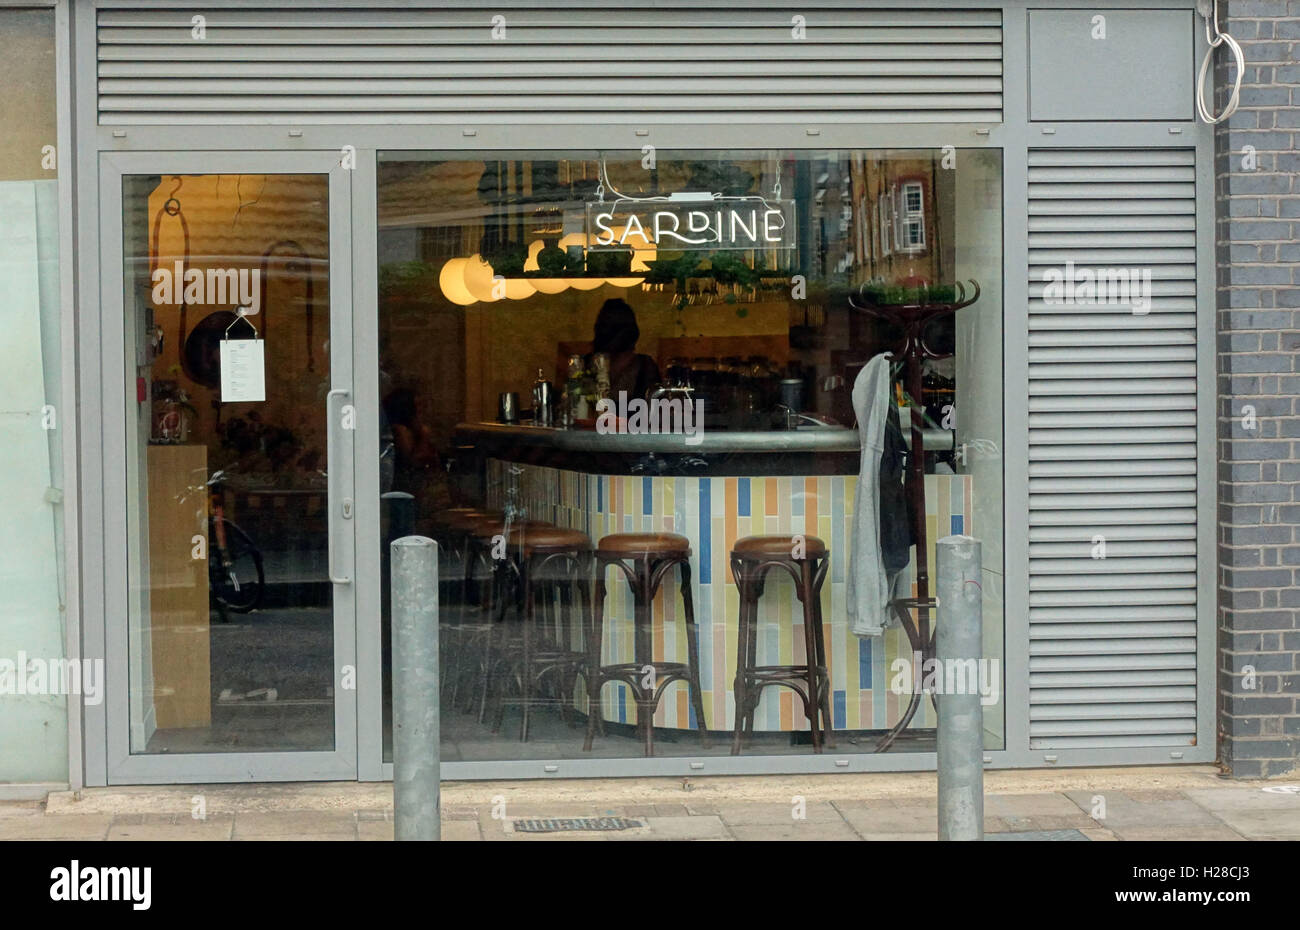 Sardine restaurant, Micawber Street, Islington, London Stock Photo